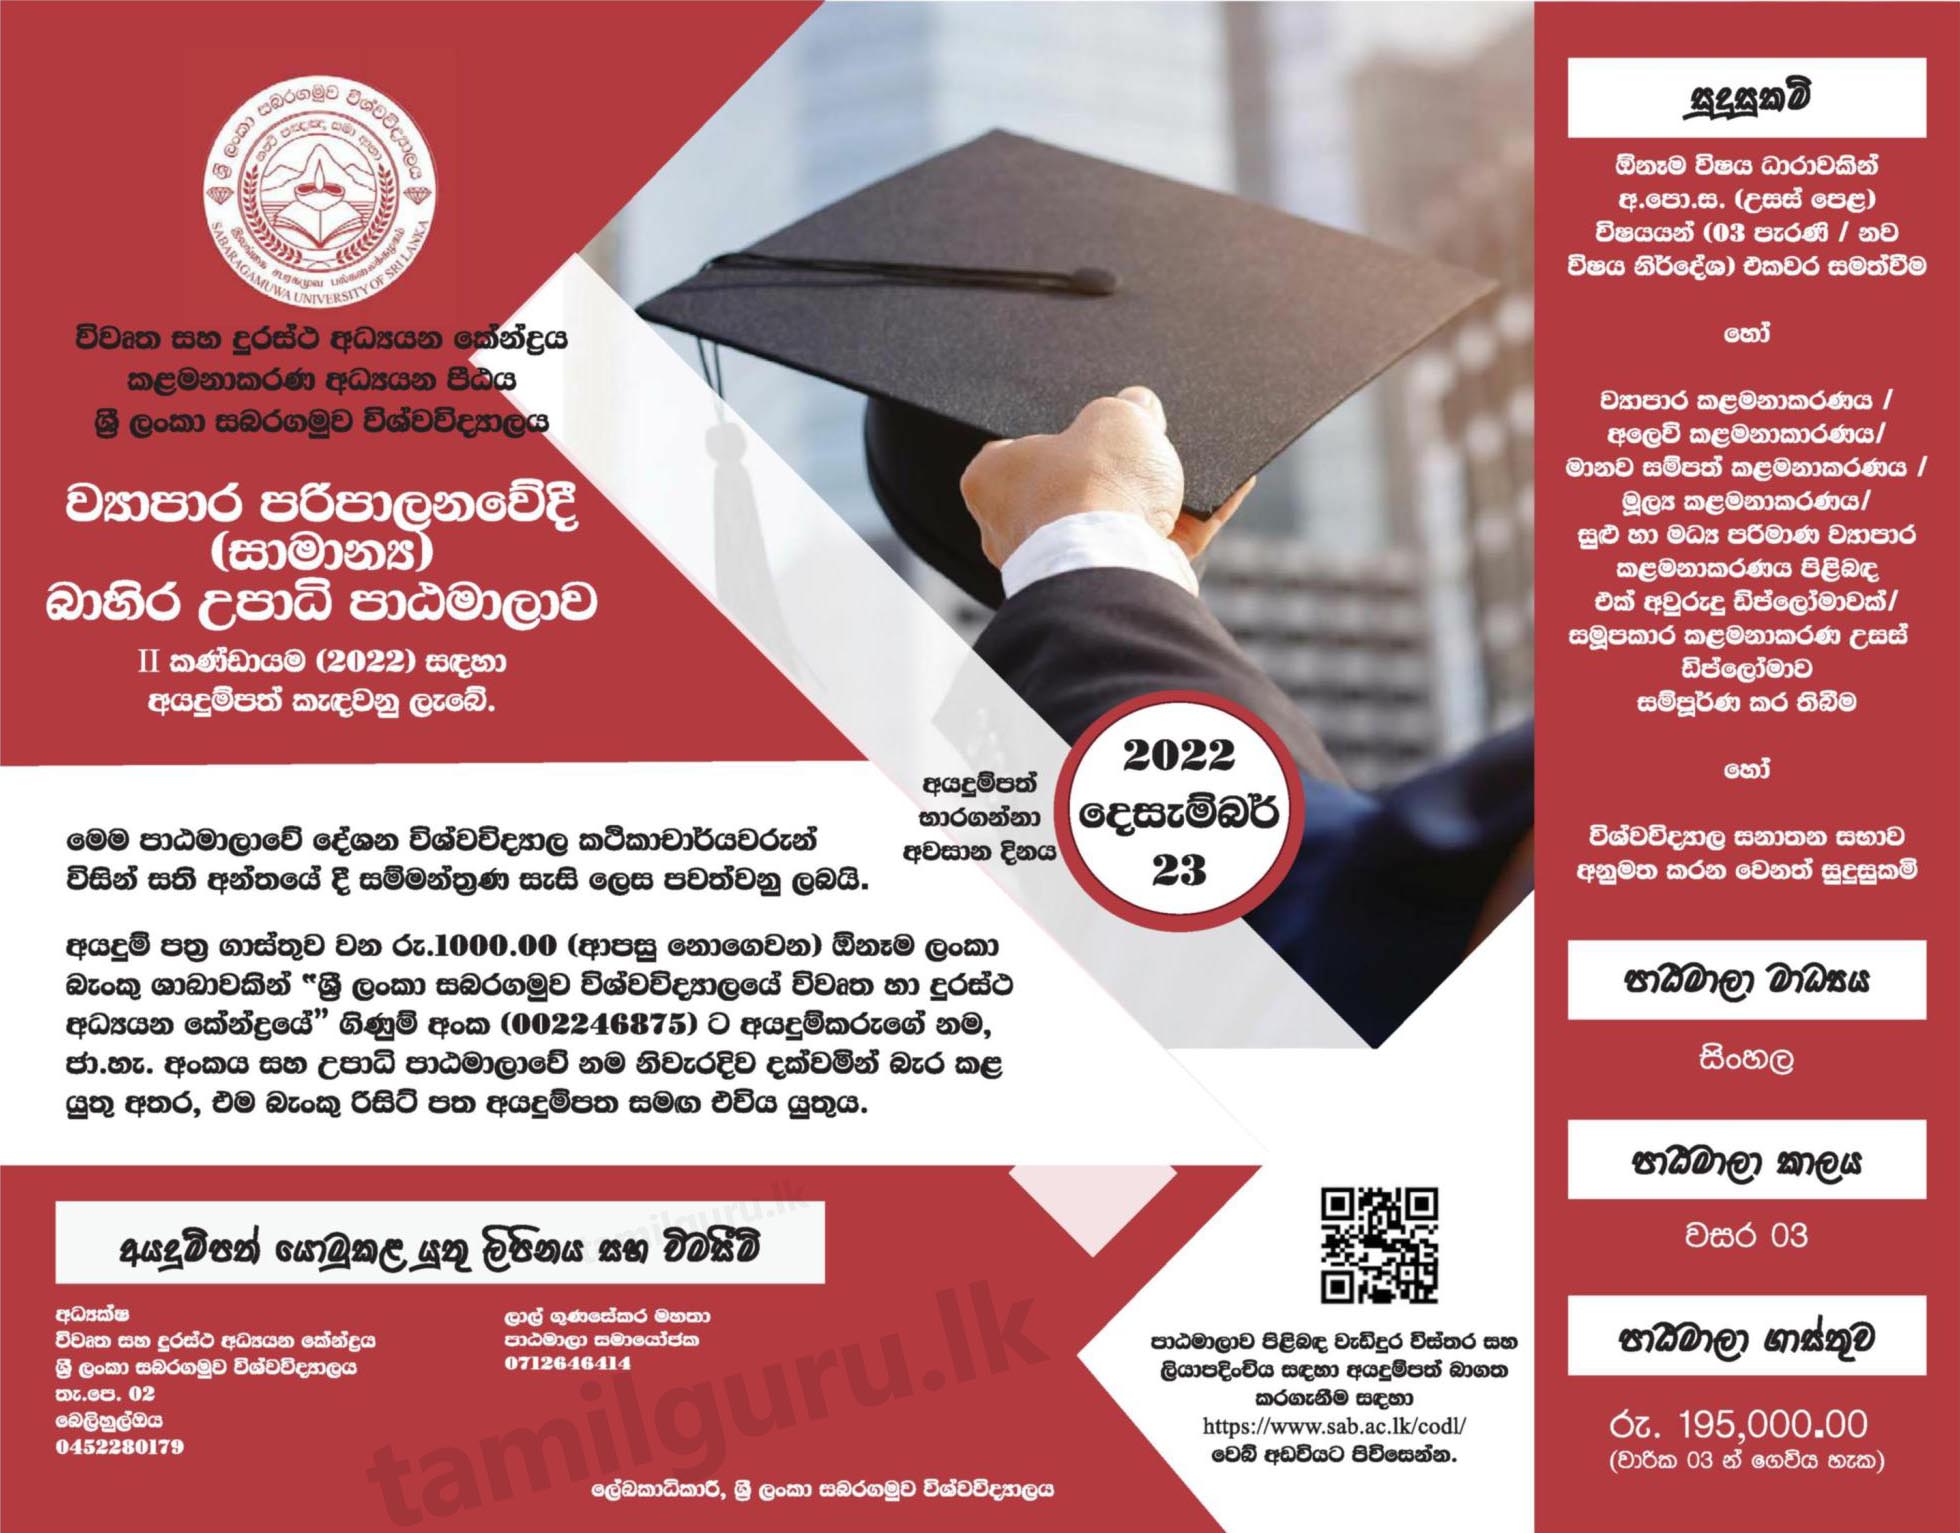 Calling Applications for Bachelor of Business Administration (BBA) External Degree Programme 2022 - Sabaragamuwa University of Sri Lanka